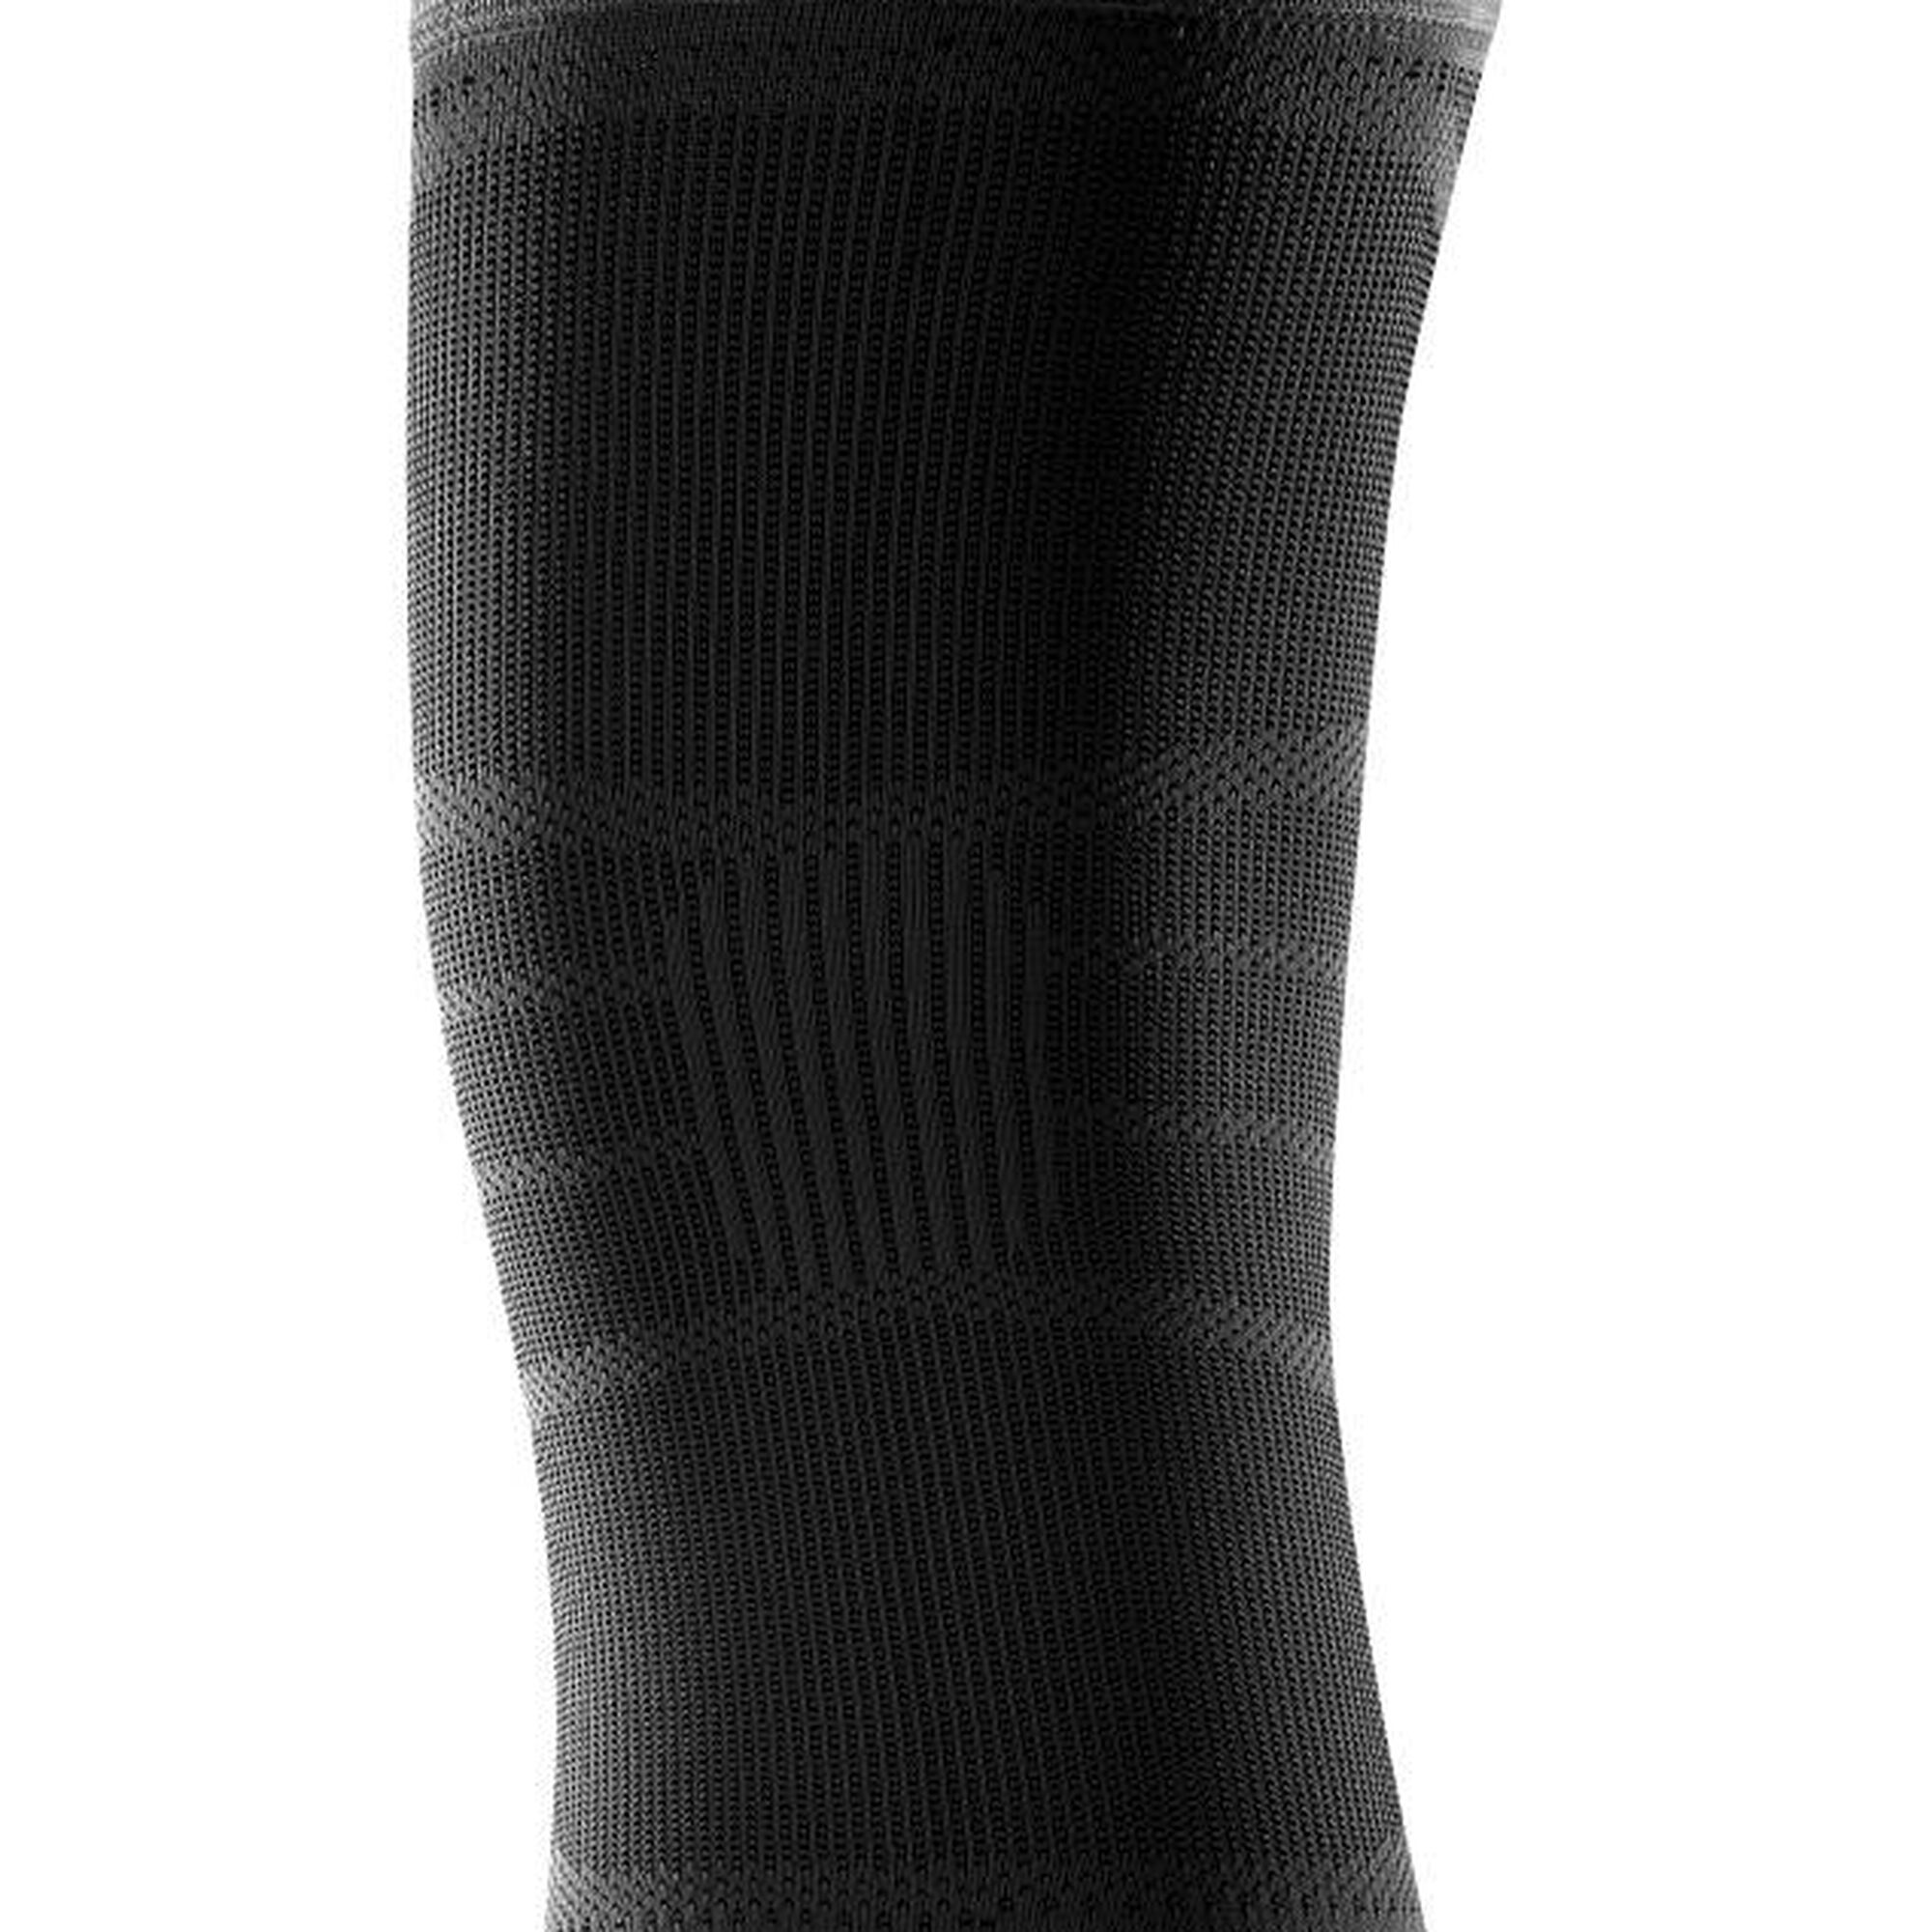 Buy Bauerfeind Sports Compression Knee Support Knee Bandage Black online